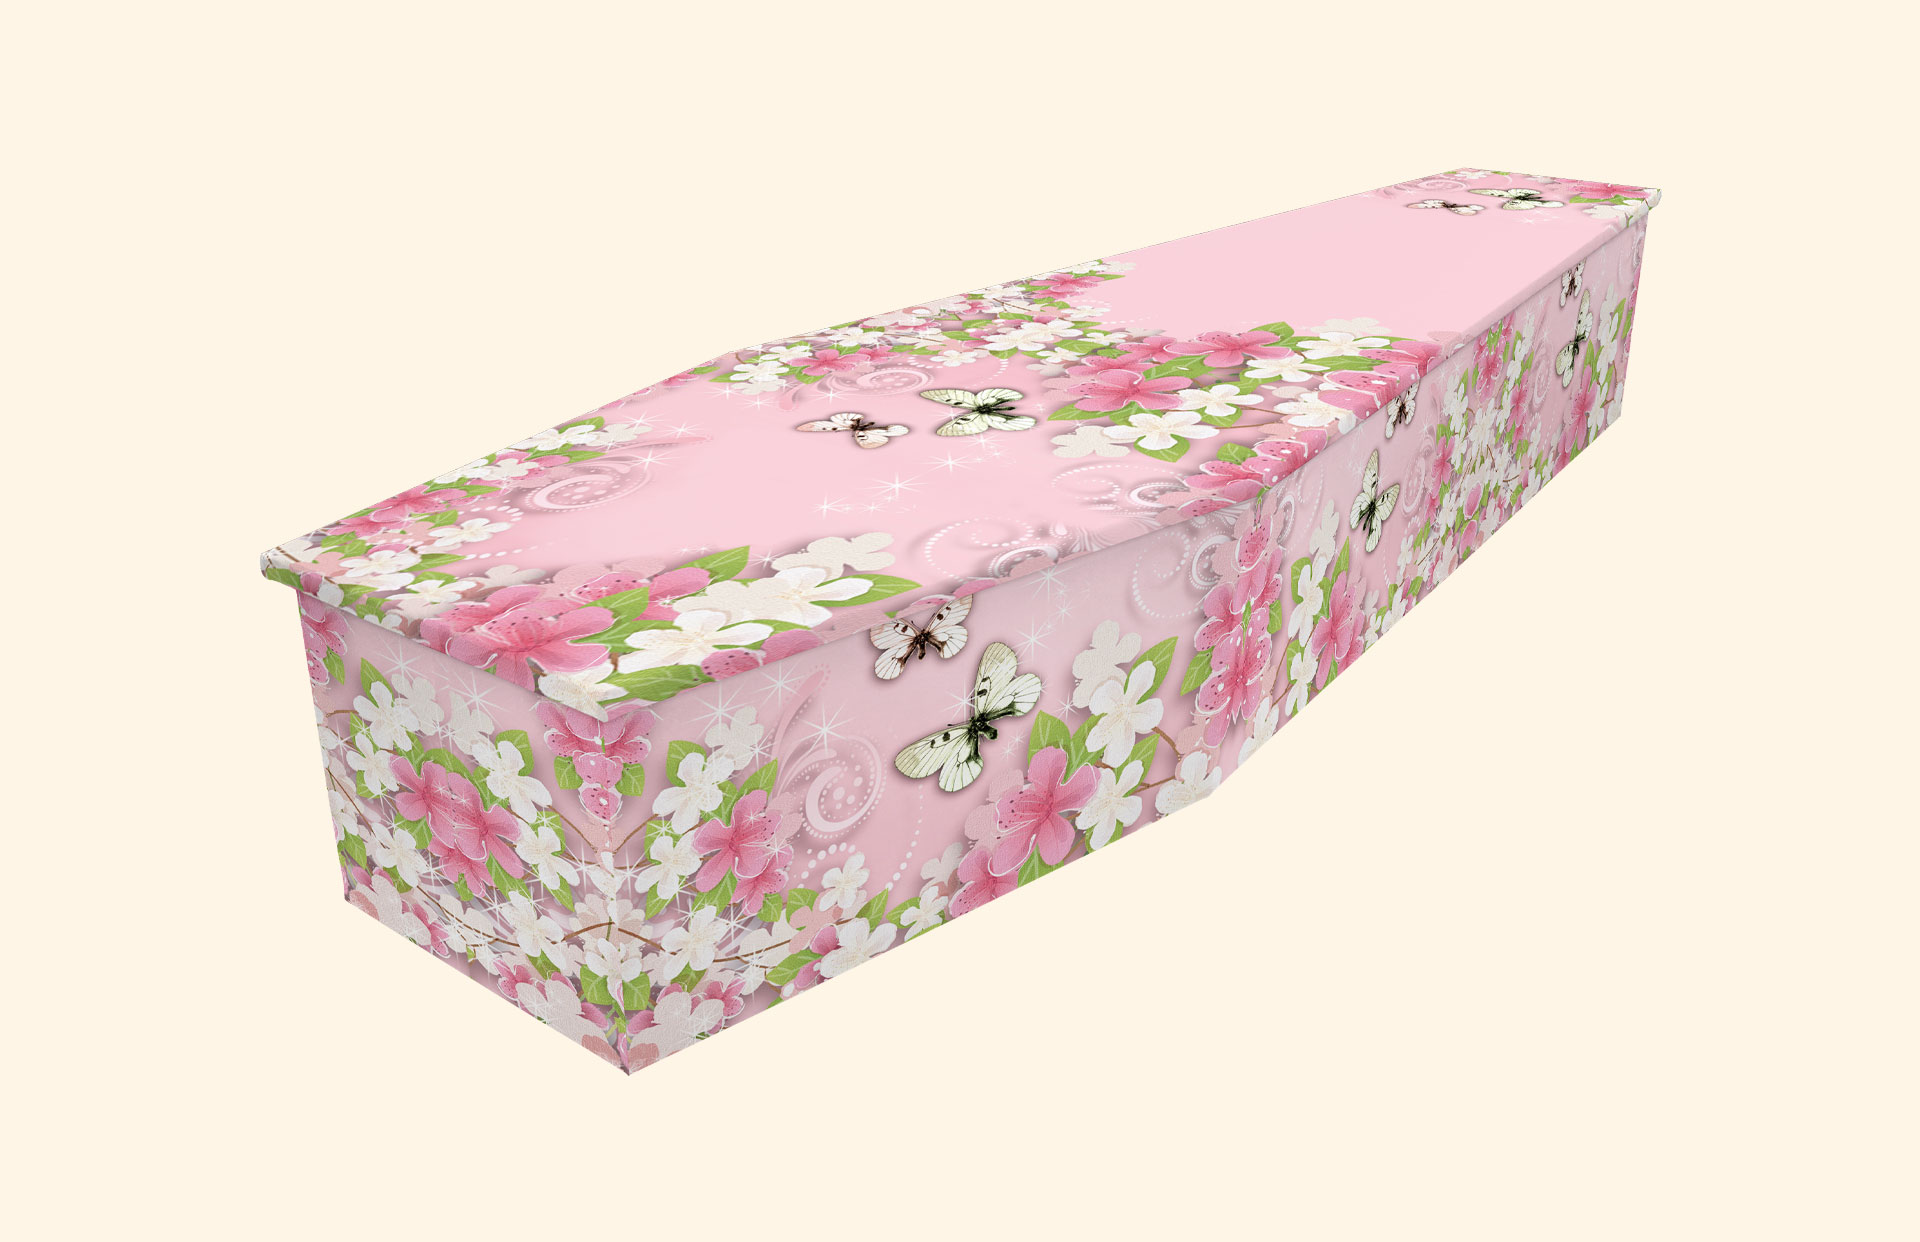 Patsy design on a cardboard coffin